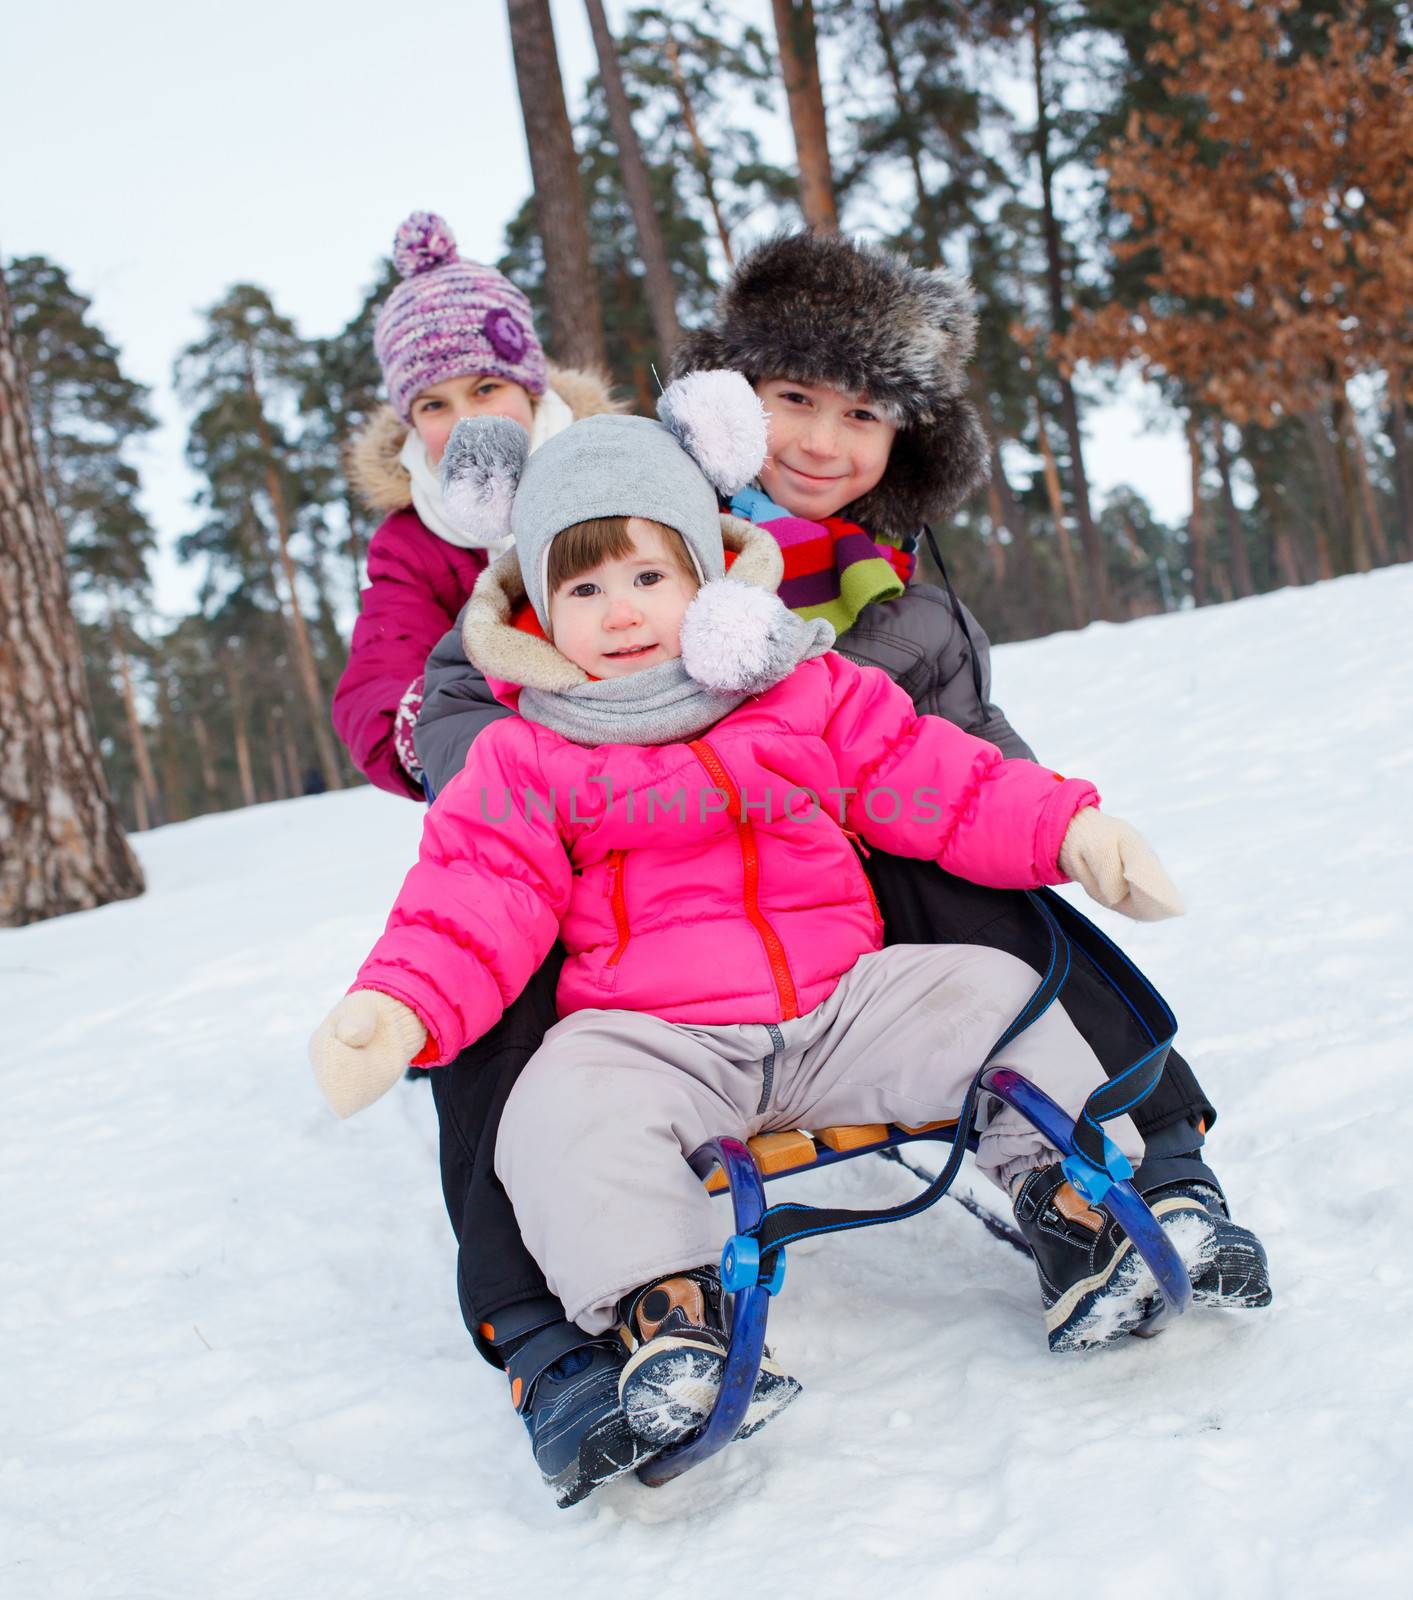 Children on sleds in snow by maxoliki